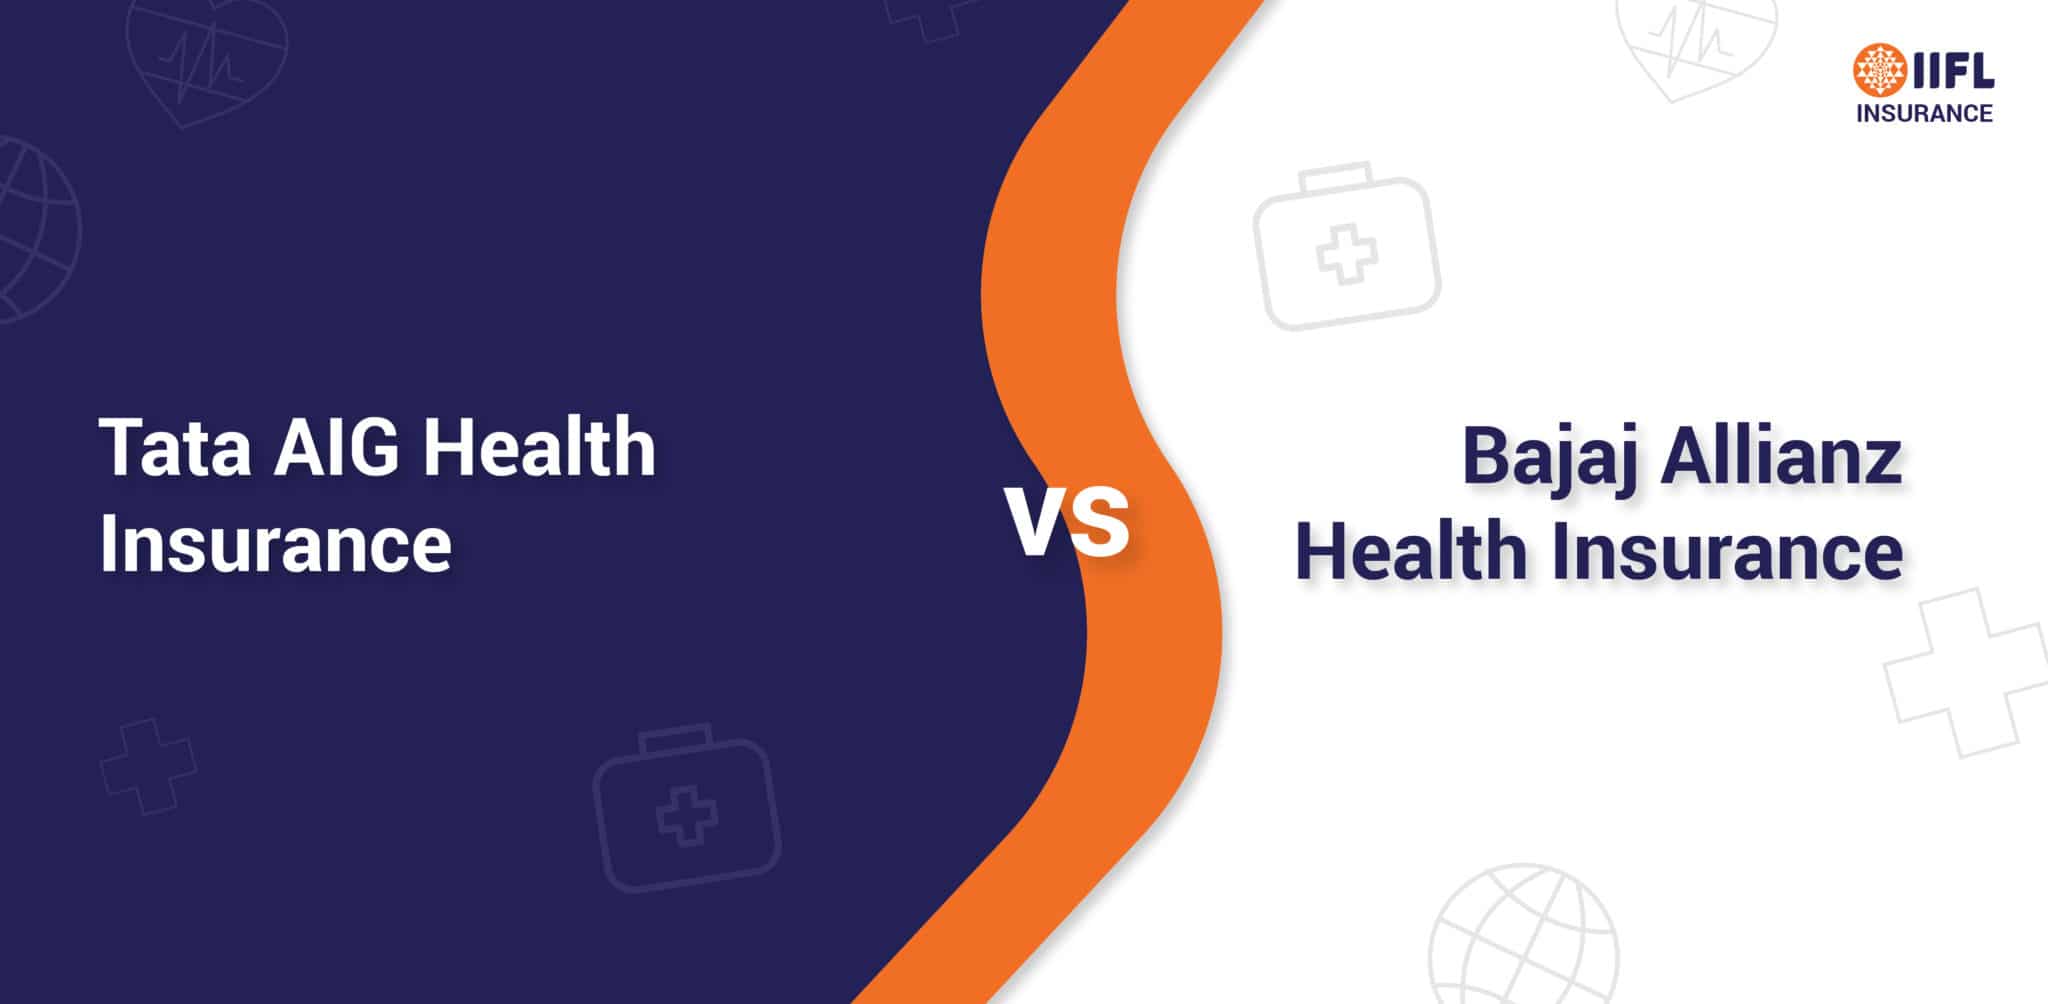 Tata AIG Health Insurance vs Bajaj Allianz Health Insurance